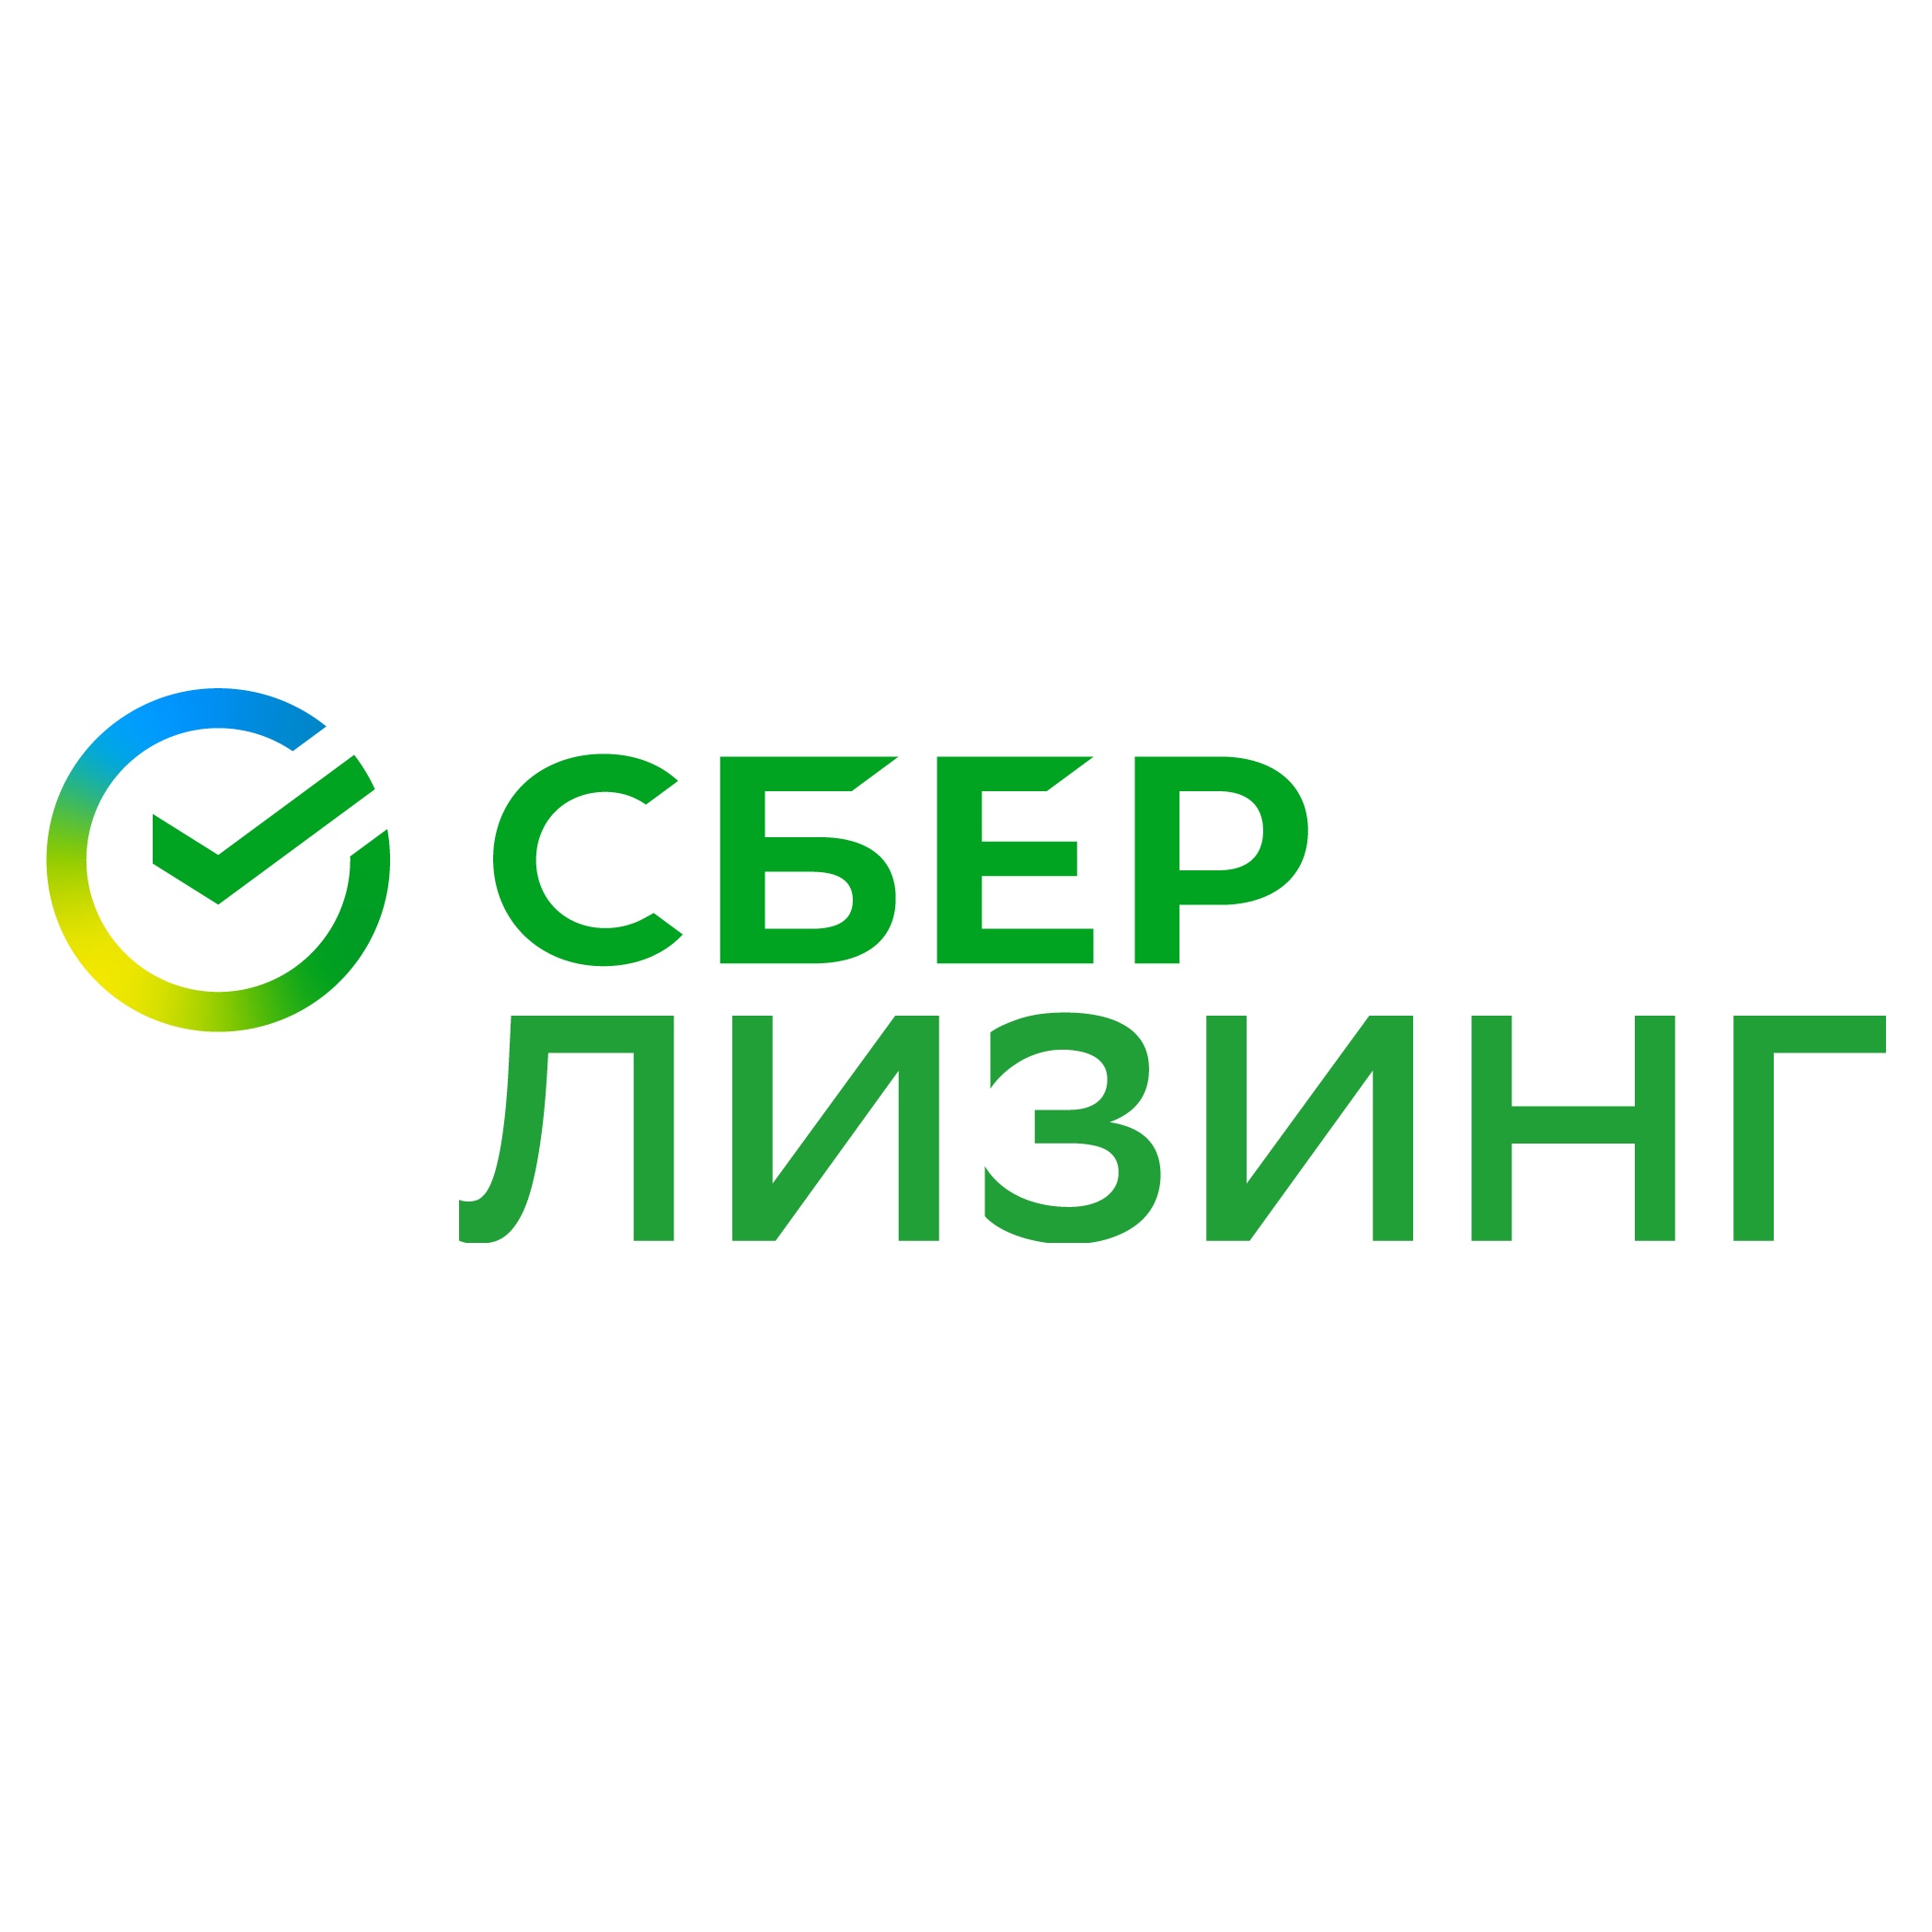 СберЛизинг поставил Администрации Ульяновска дорожную технику на 107 млн рублей - фото 1